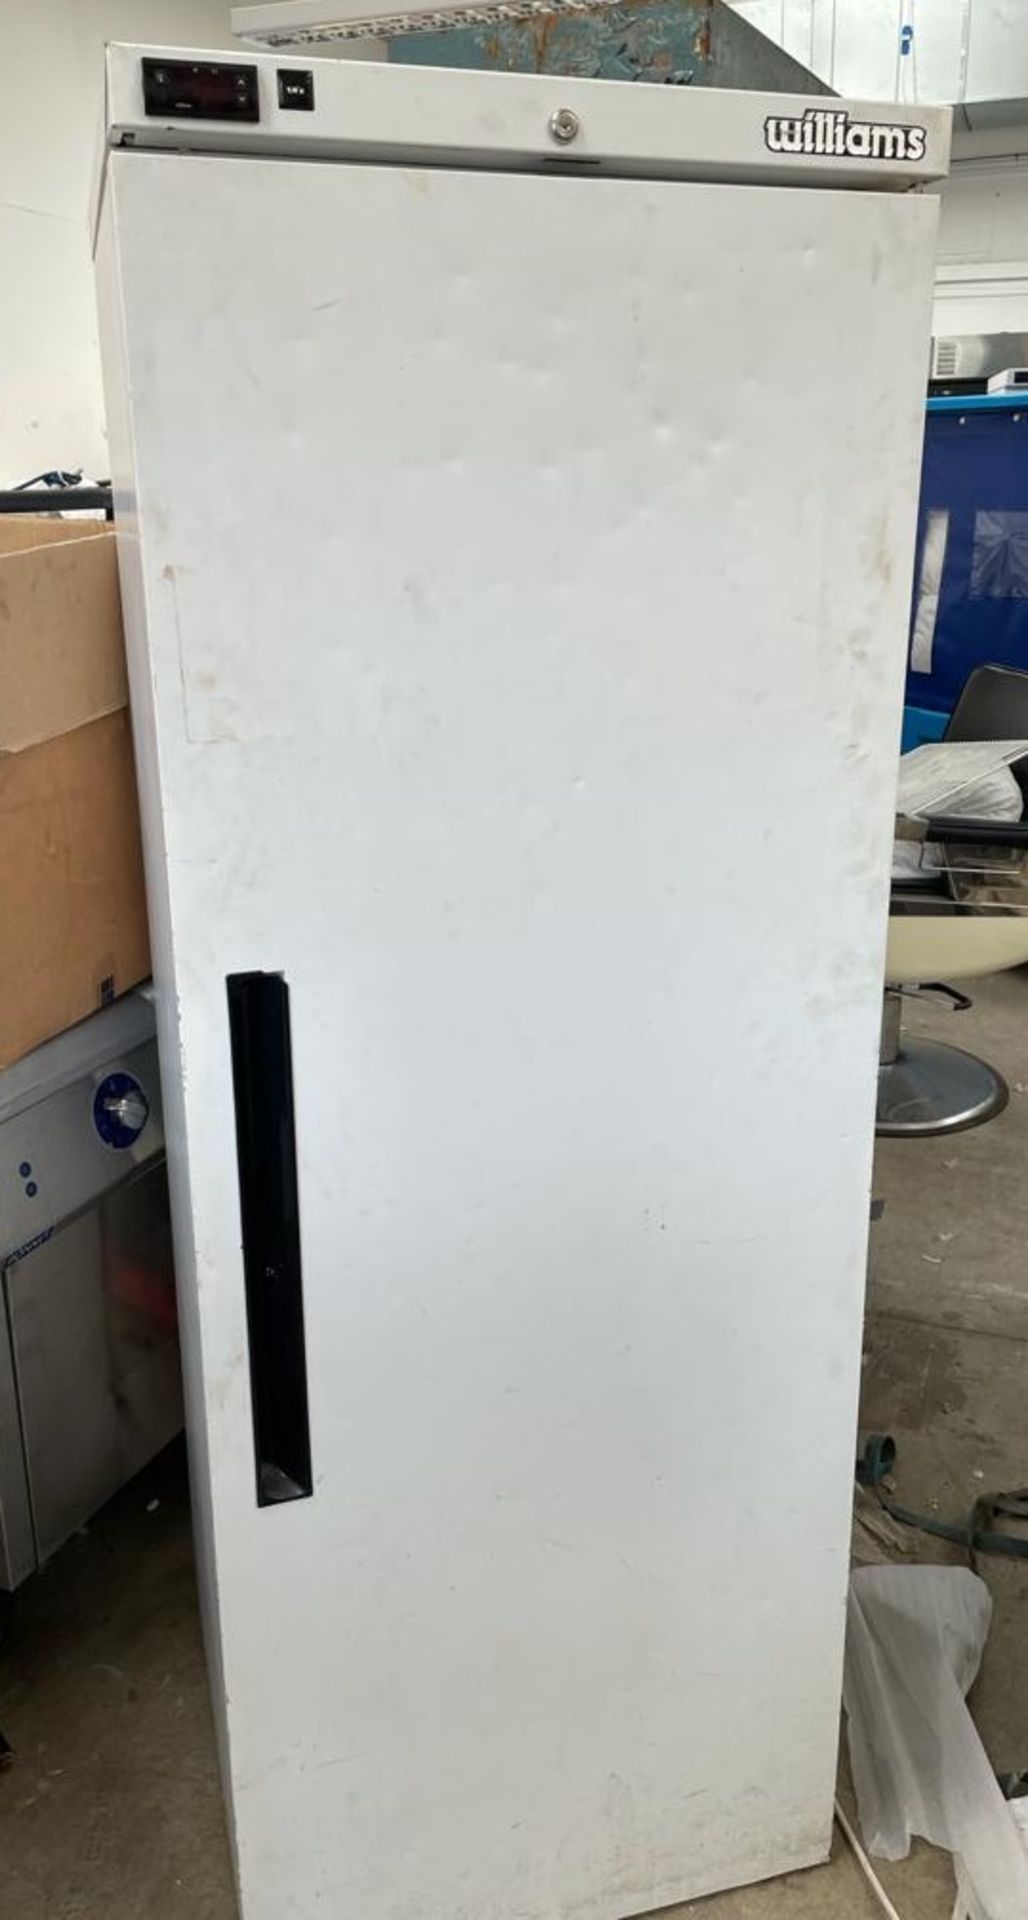 1 x Williams Upright Refrigerator - Model HP14SC - CL667 - Location: Brighton, Sussex,